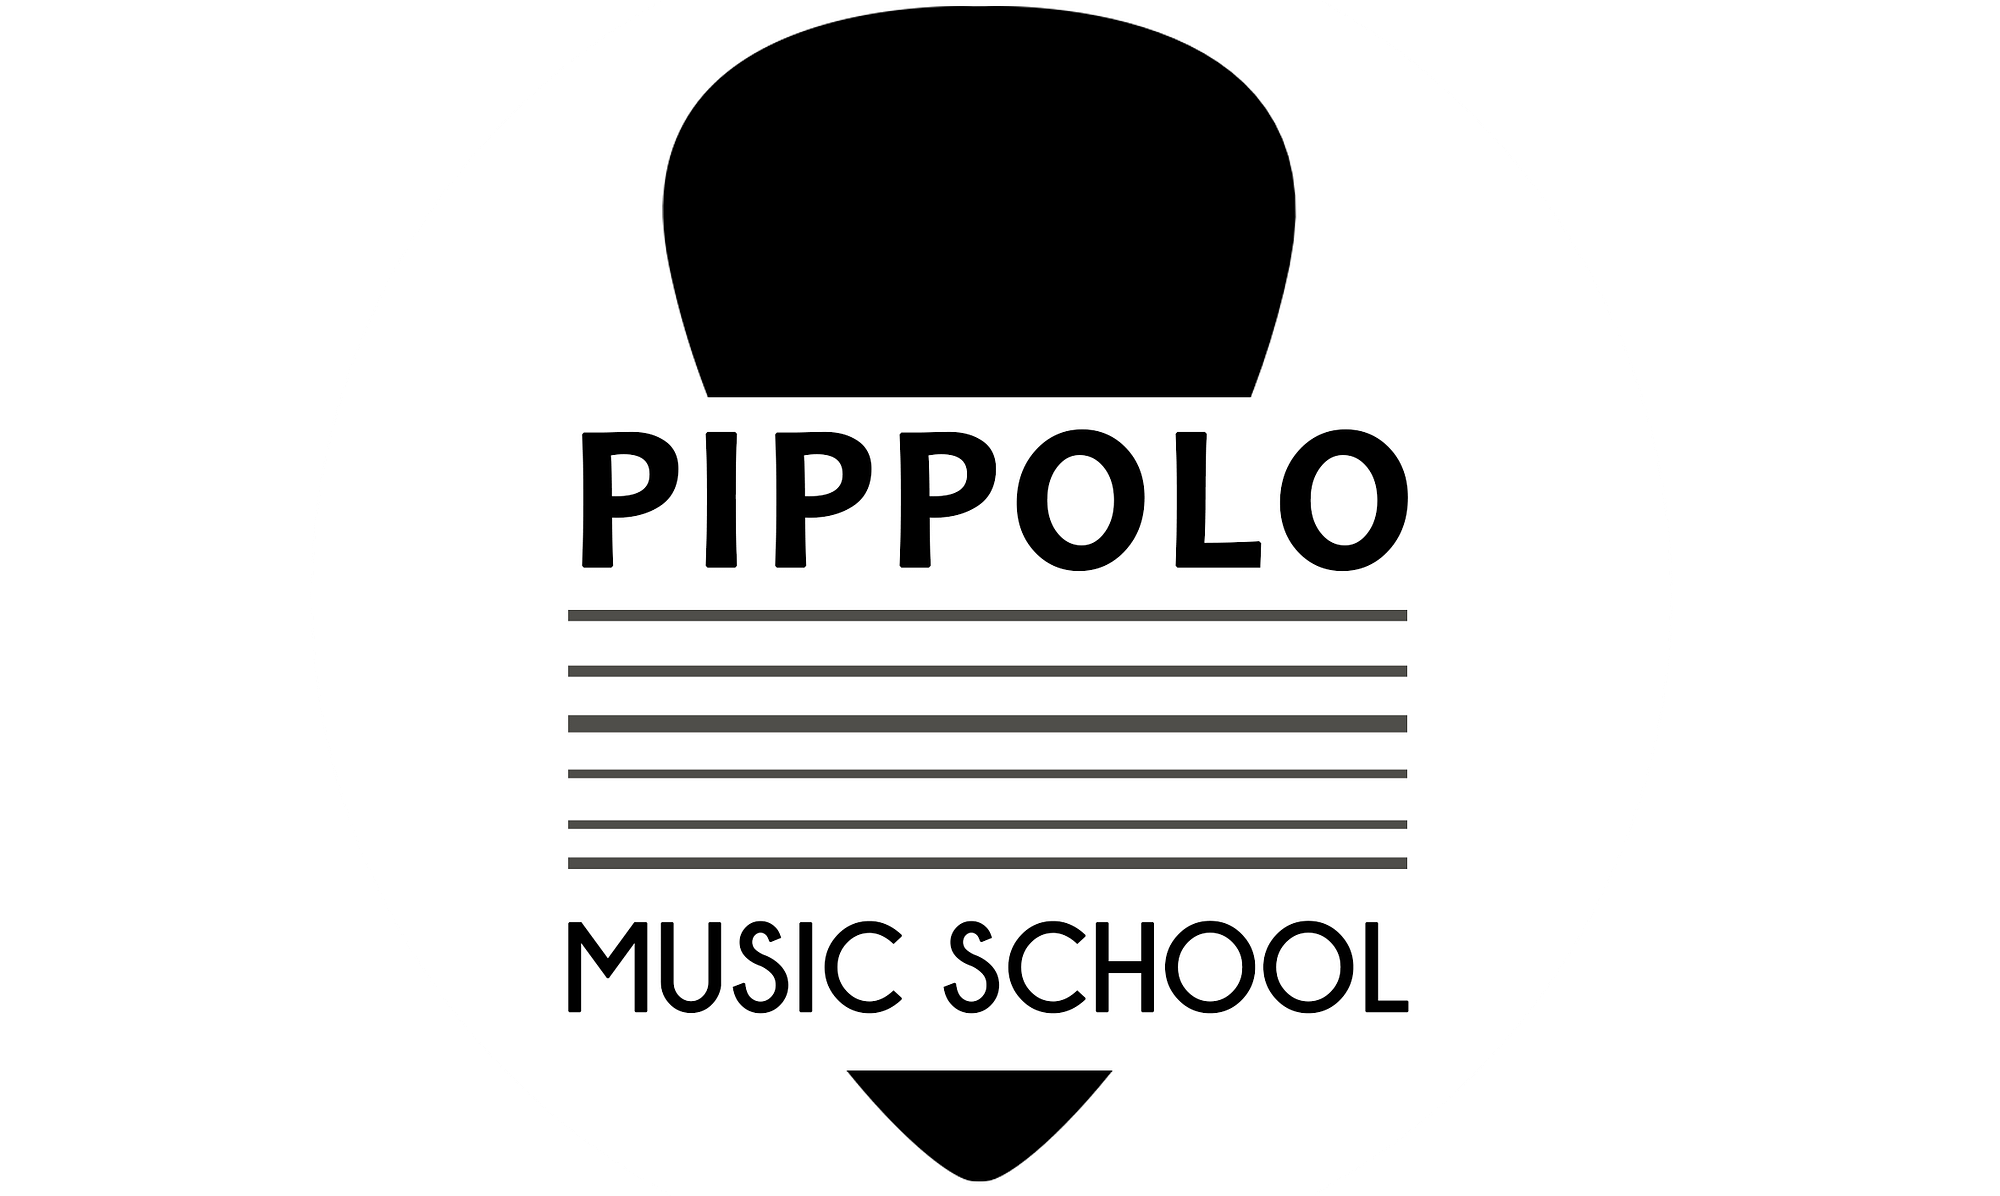 Pippolo Music School